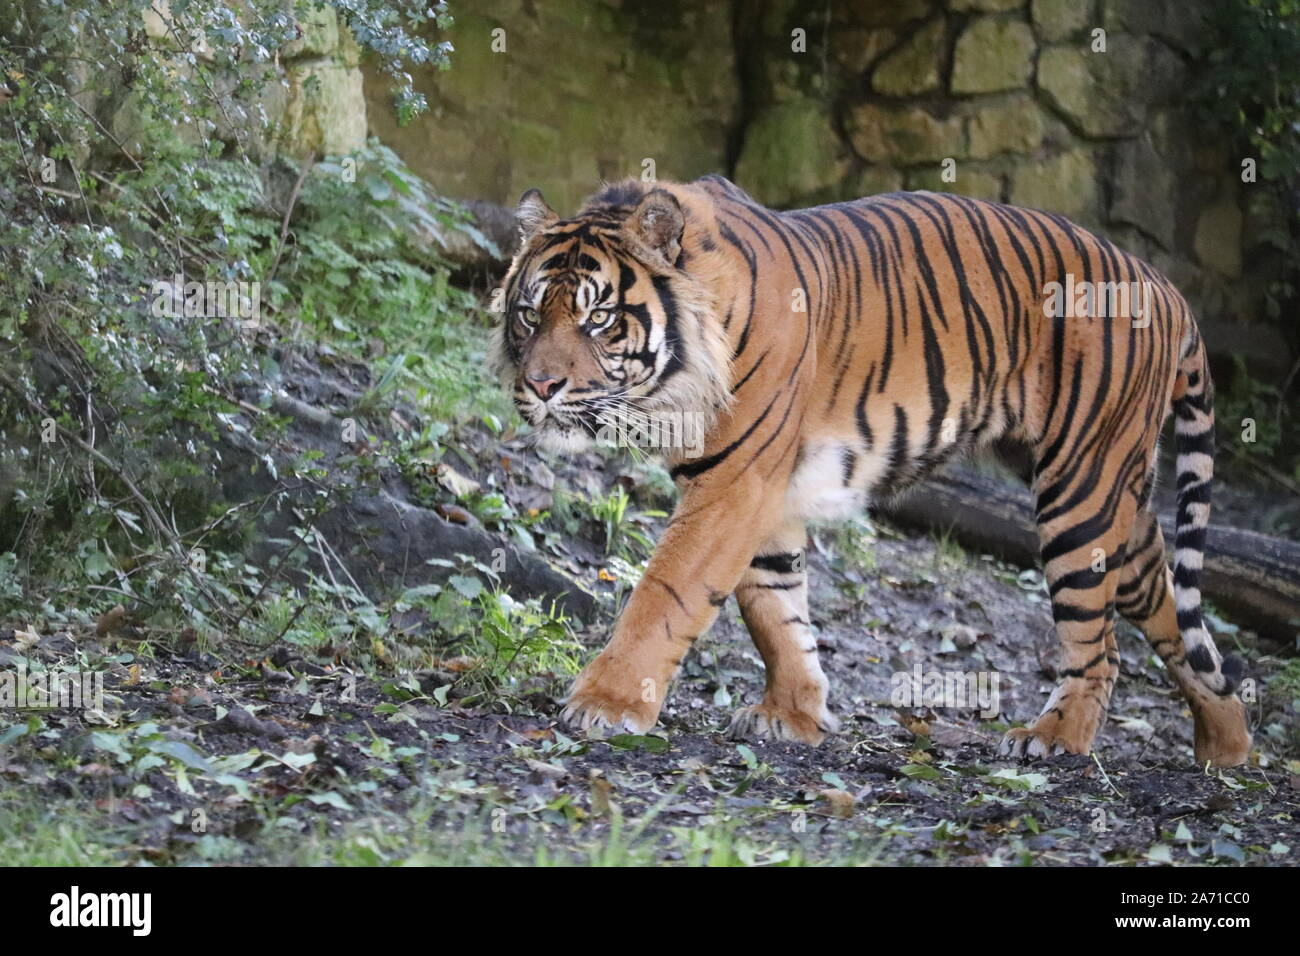 Male Sumatran Tiger, Joao, patrolling his enclosure (panthera tigris sumatrae) Stock Photo